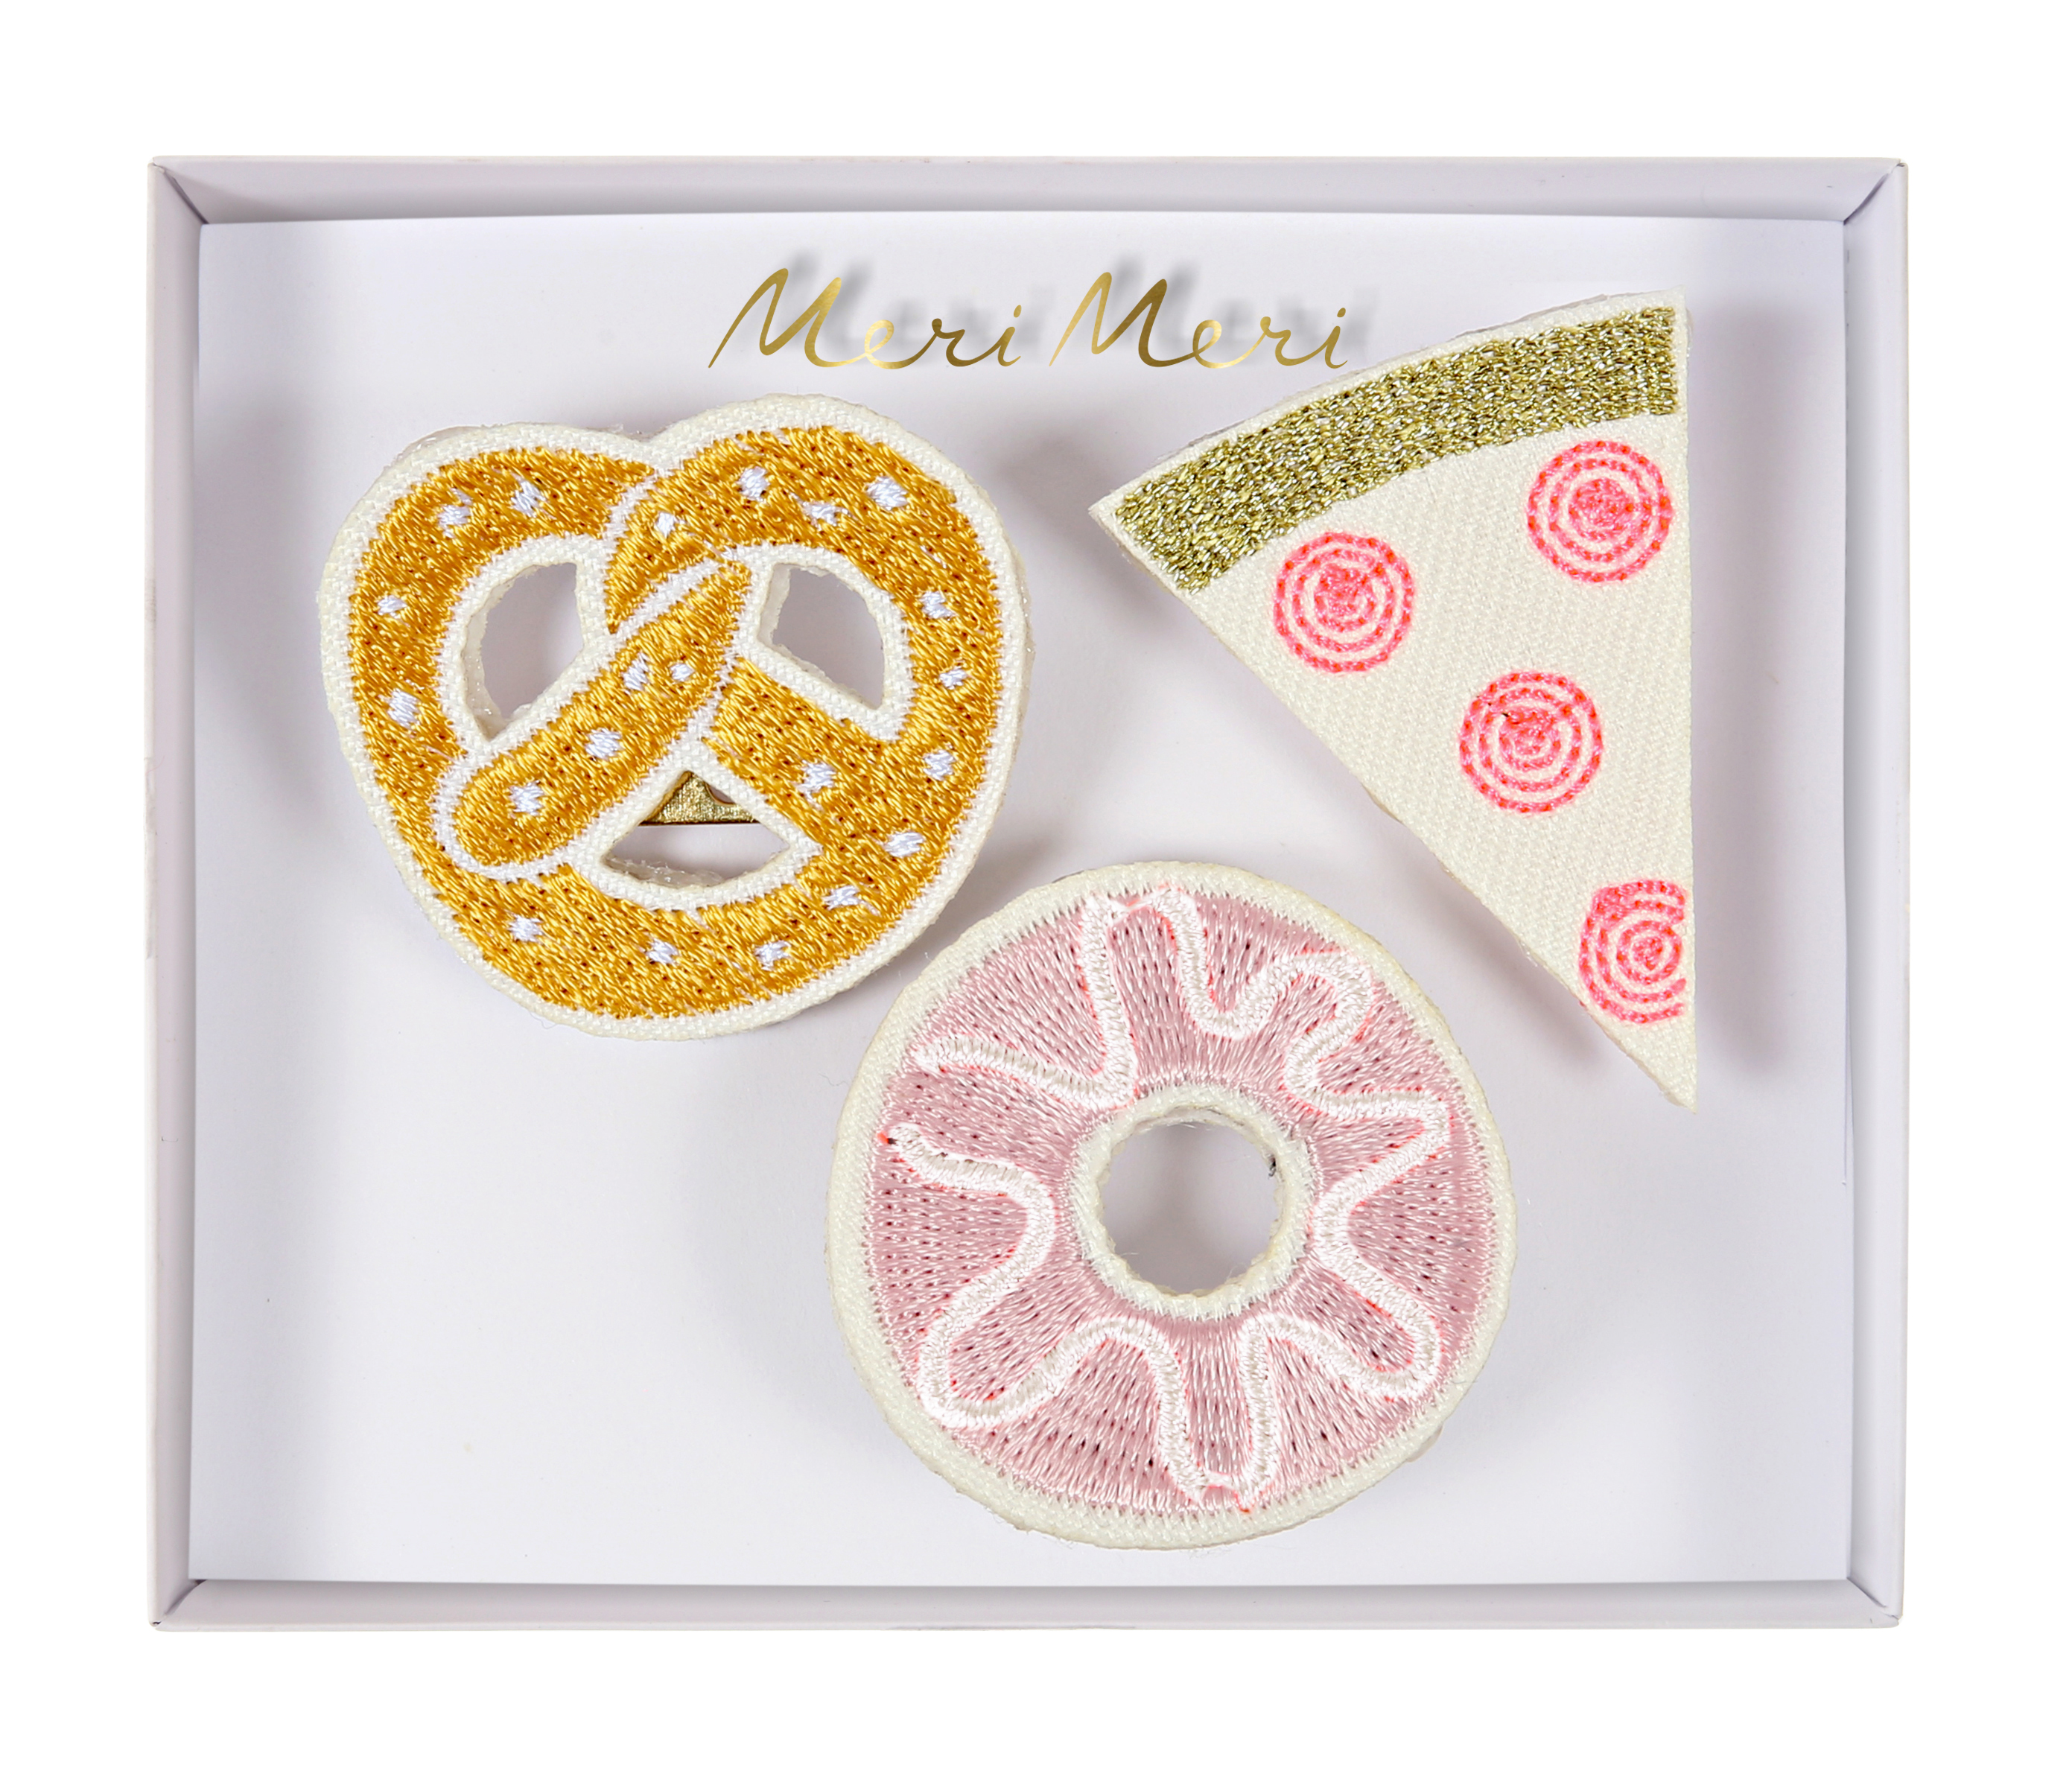 Pizza, Pretzel and Doughnut patch 
															/ Meri Meri							